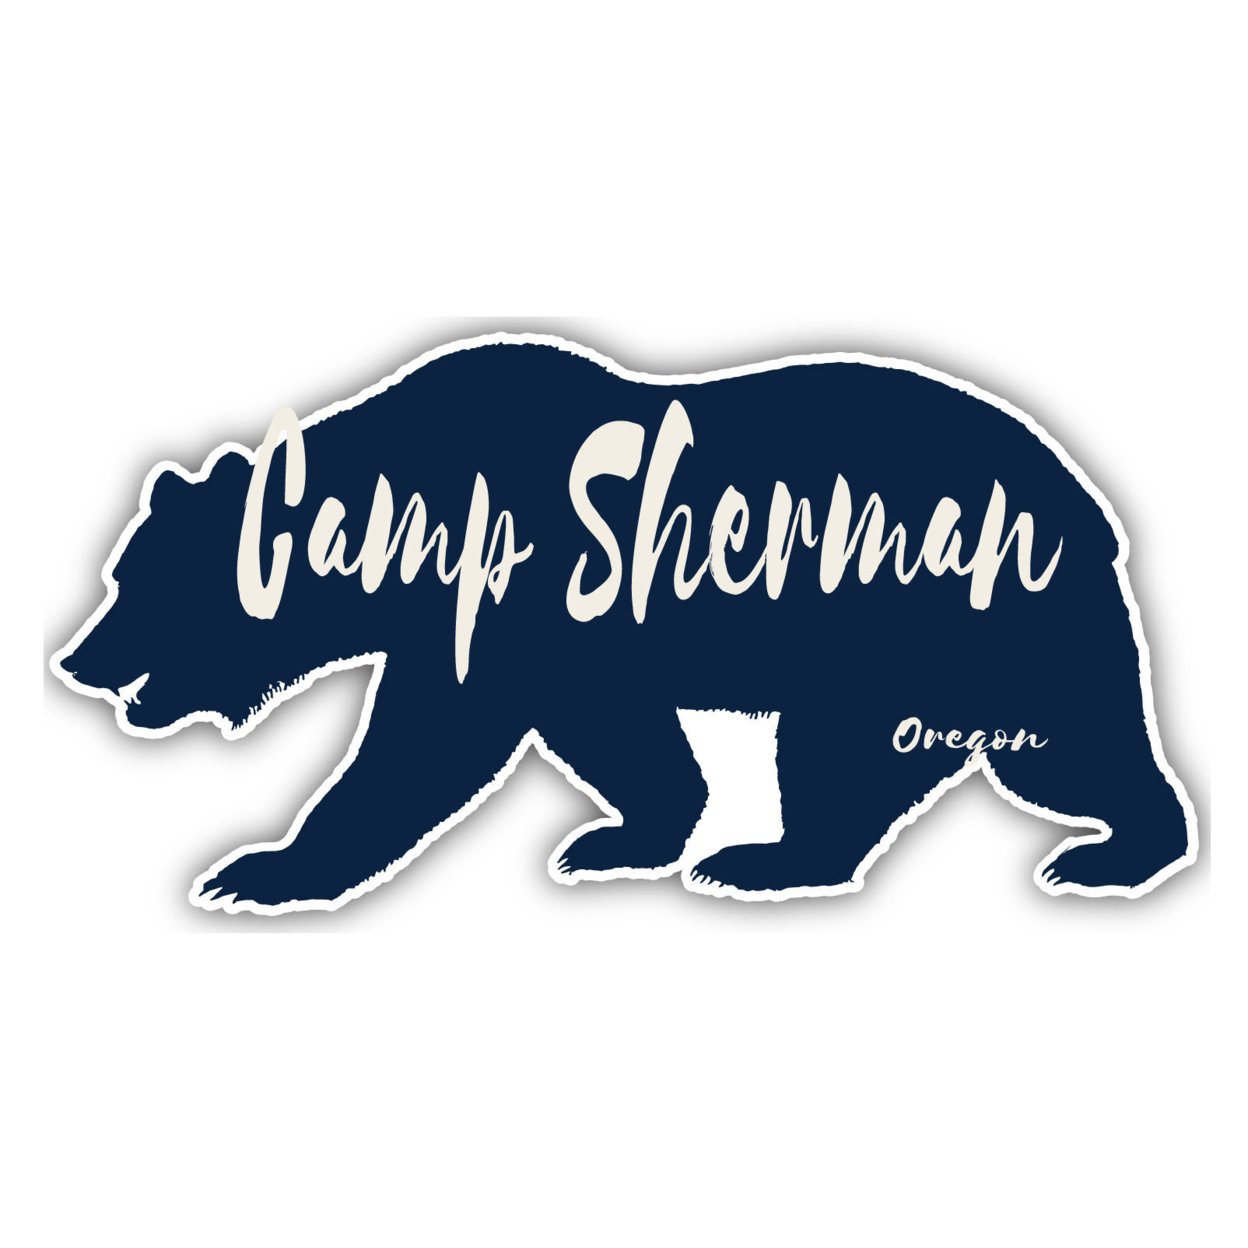 Camp Sherman Oregon Souvenir Decorative Stickers (Choose Theme And Size) - Single Unit, 8-Inch, Bear